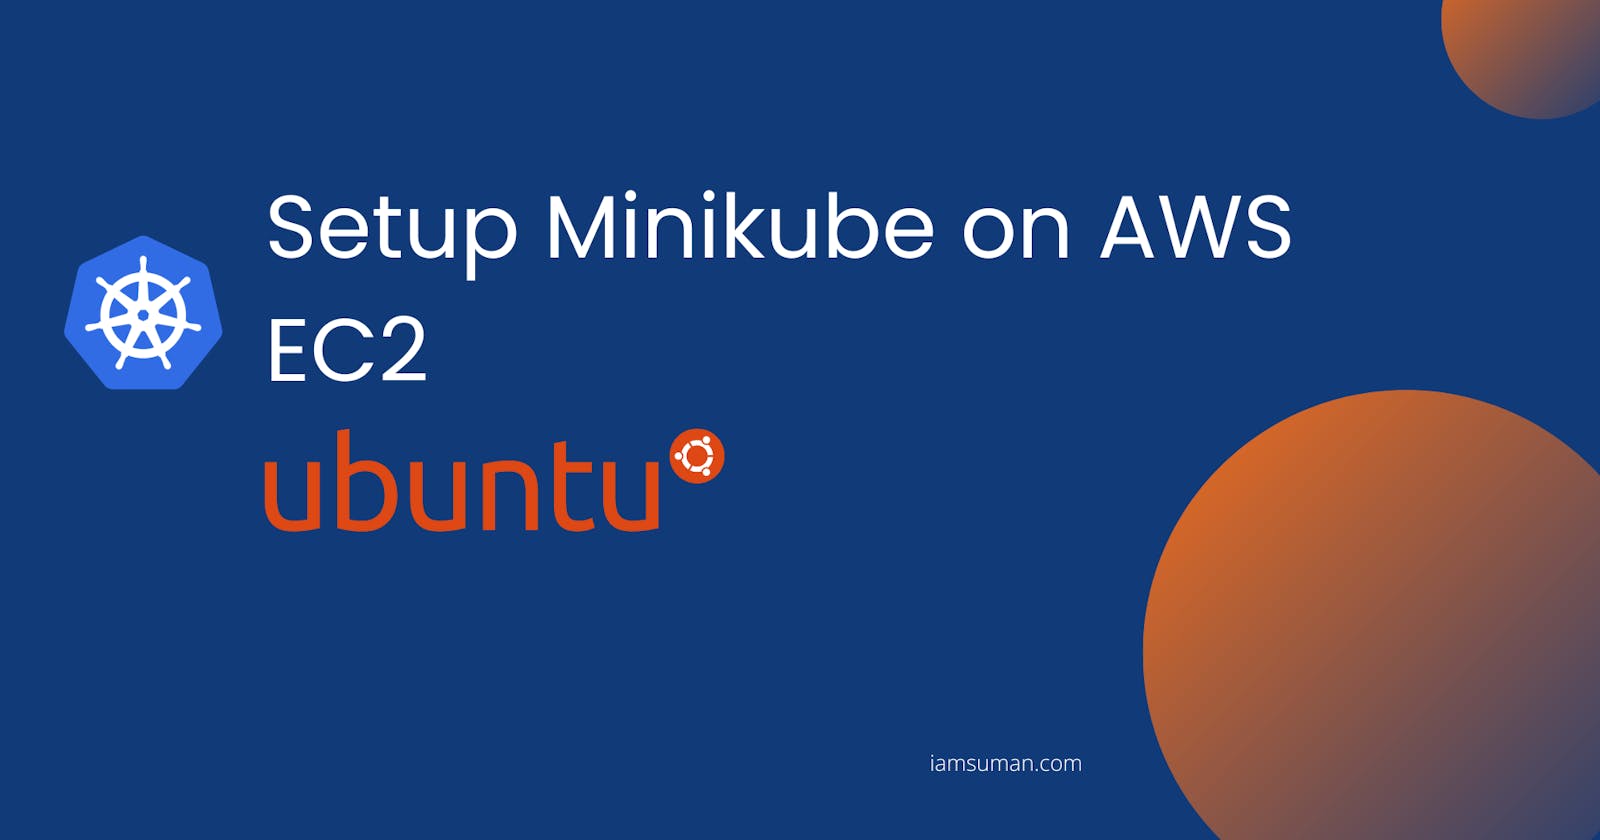 Setup Minikube on AWS EC2 Ubuntu